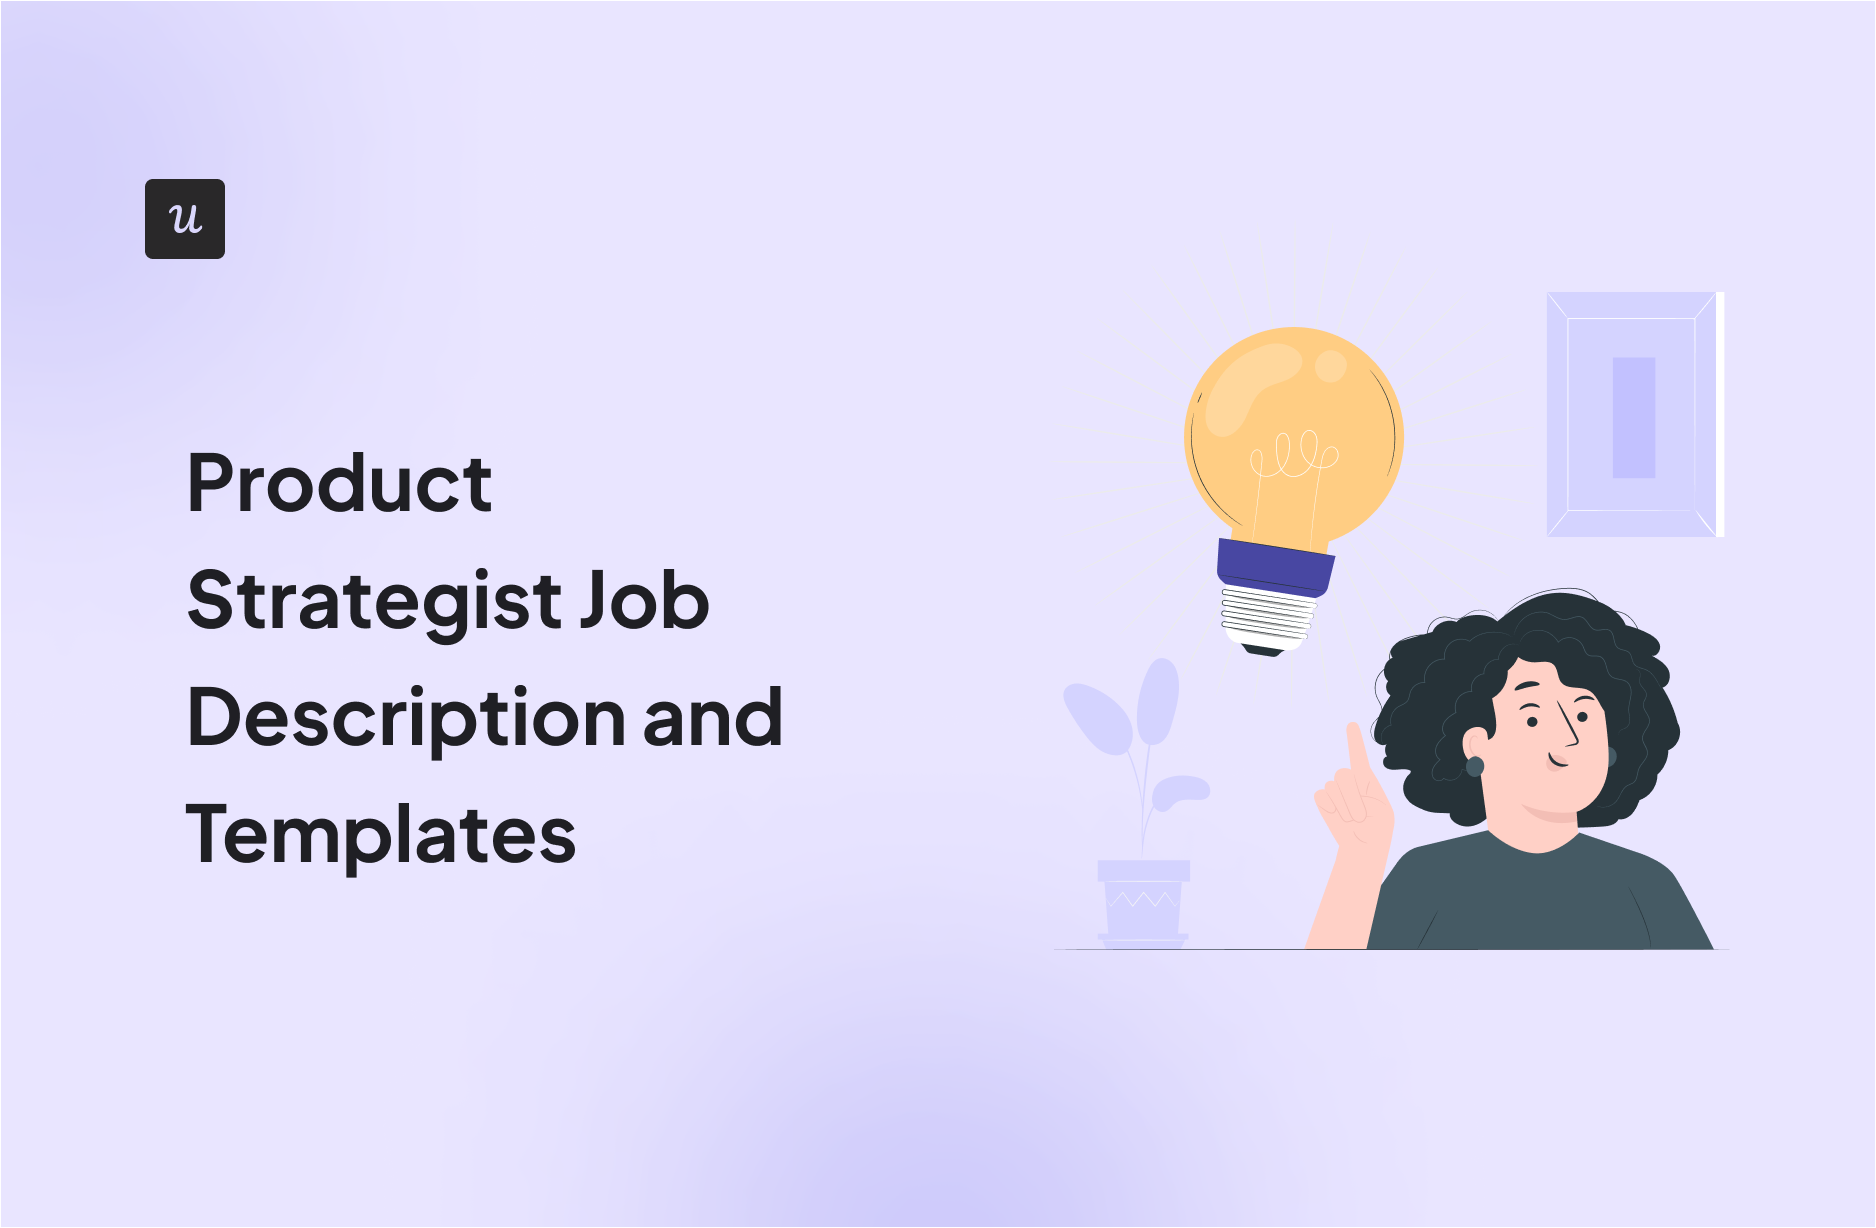 Product Strategist Job Description and Templates